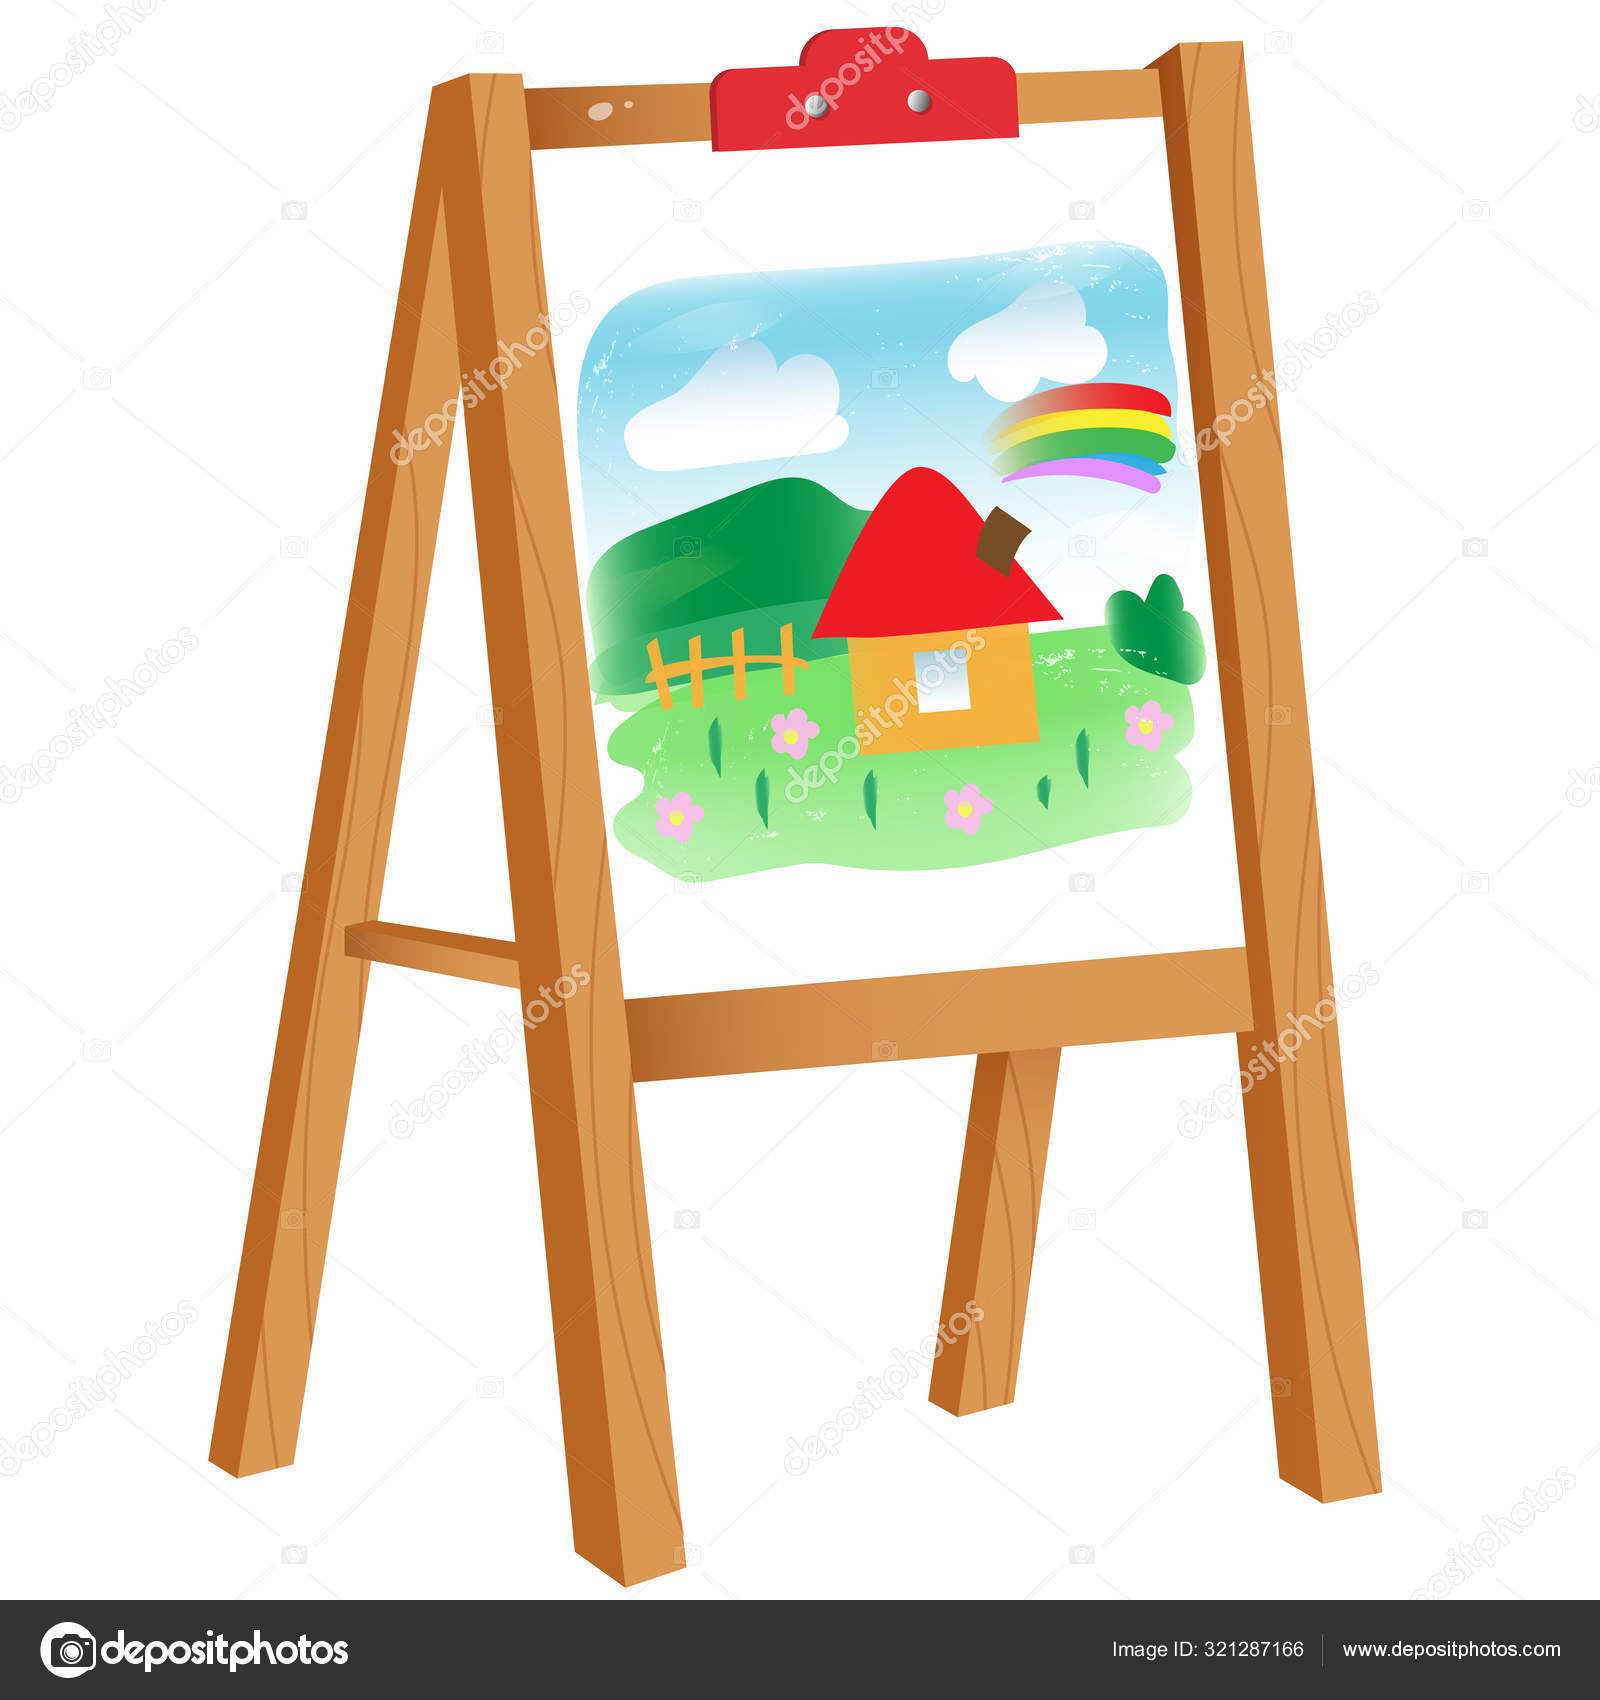 https://st3.depositphotos.com/5722118/32128/v/1600/depositphotos_321287166-stock-illustration-color-image-of-cartoon-easel.jpg